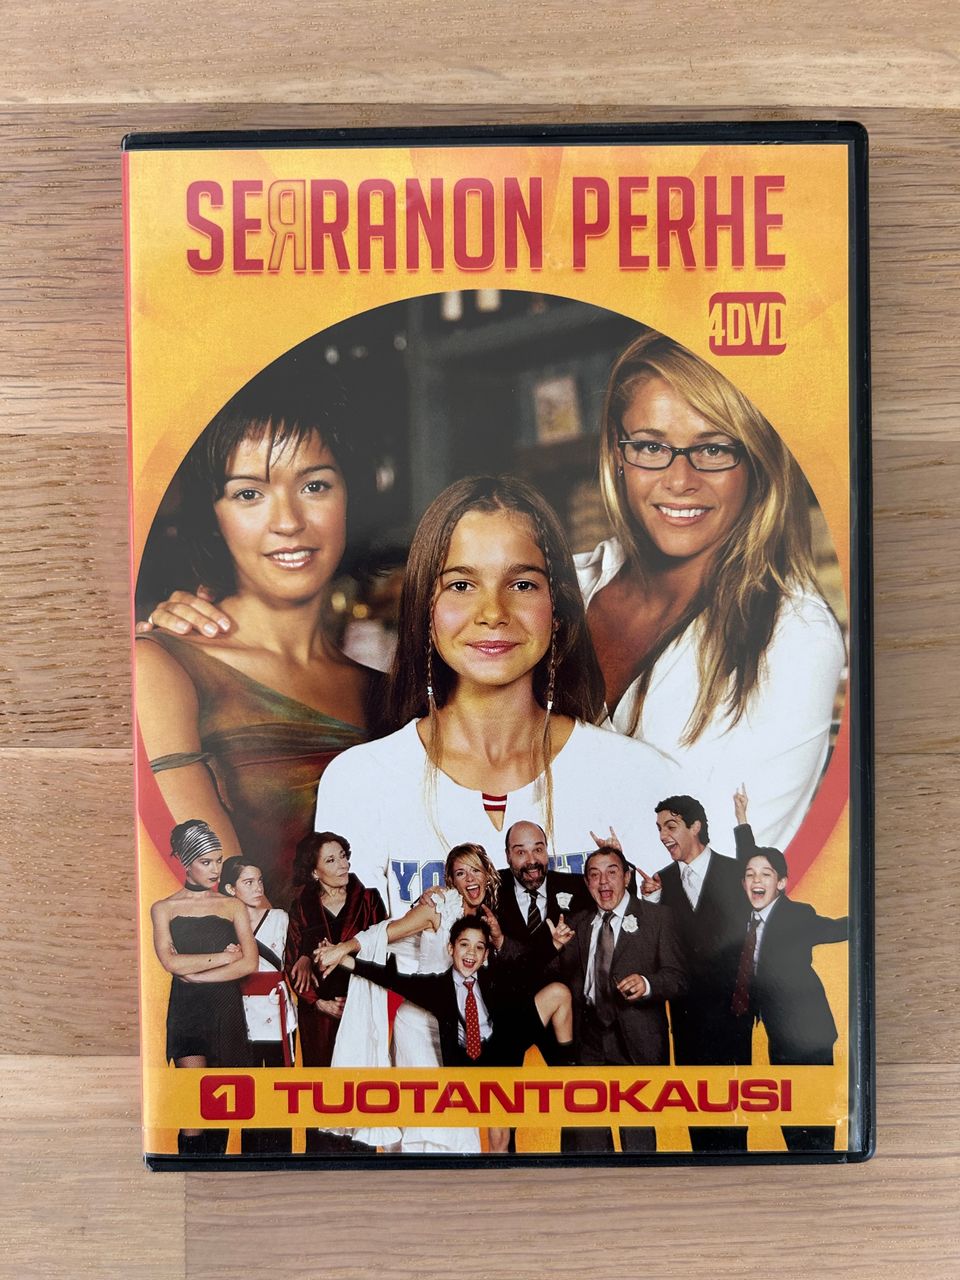 Serranon perhe 1 tuotantokausi